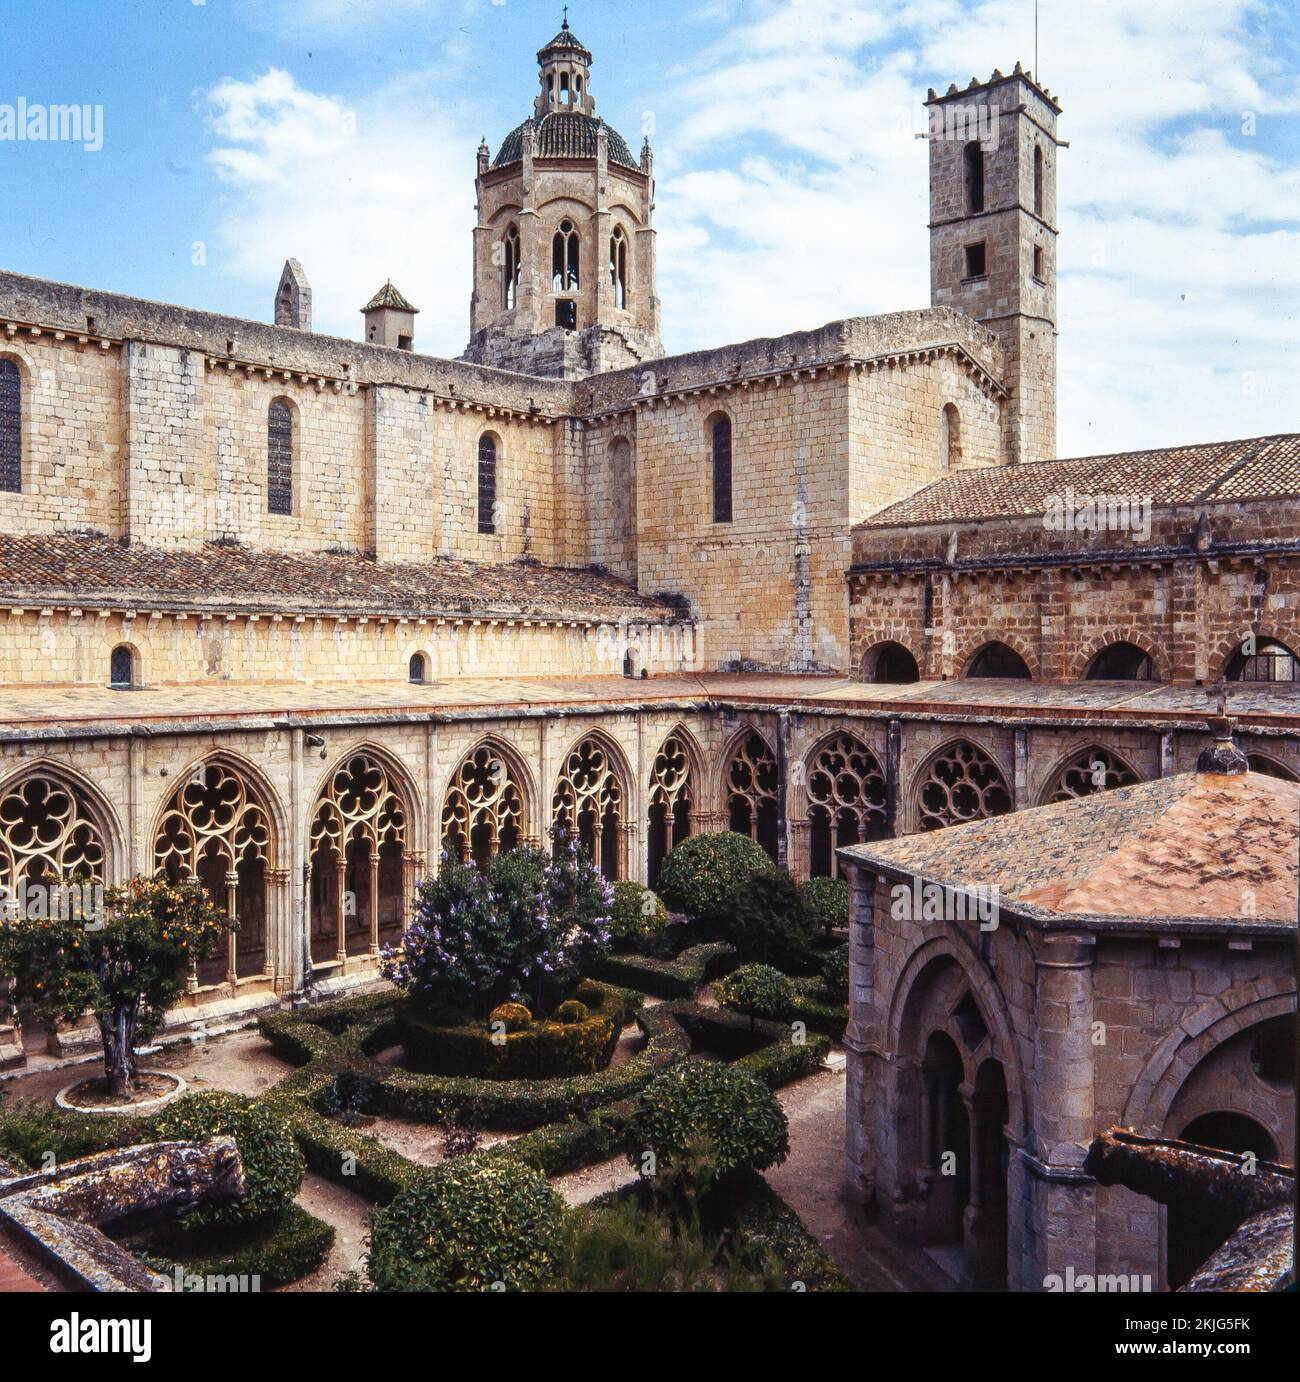 Monasterio de Santes Creus, Tarragona. Stock Photo